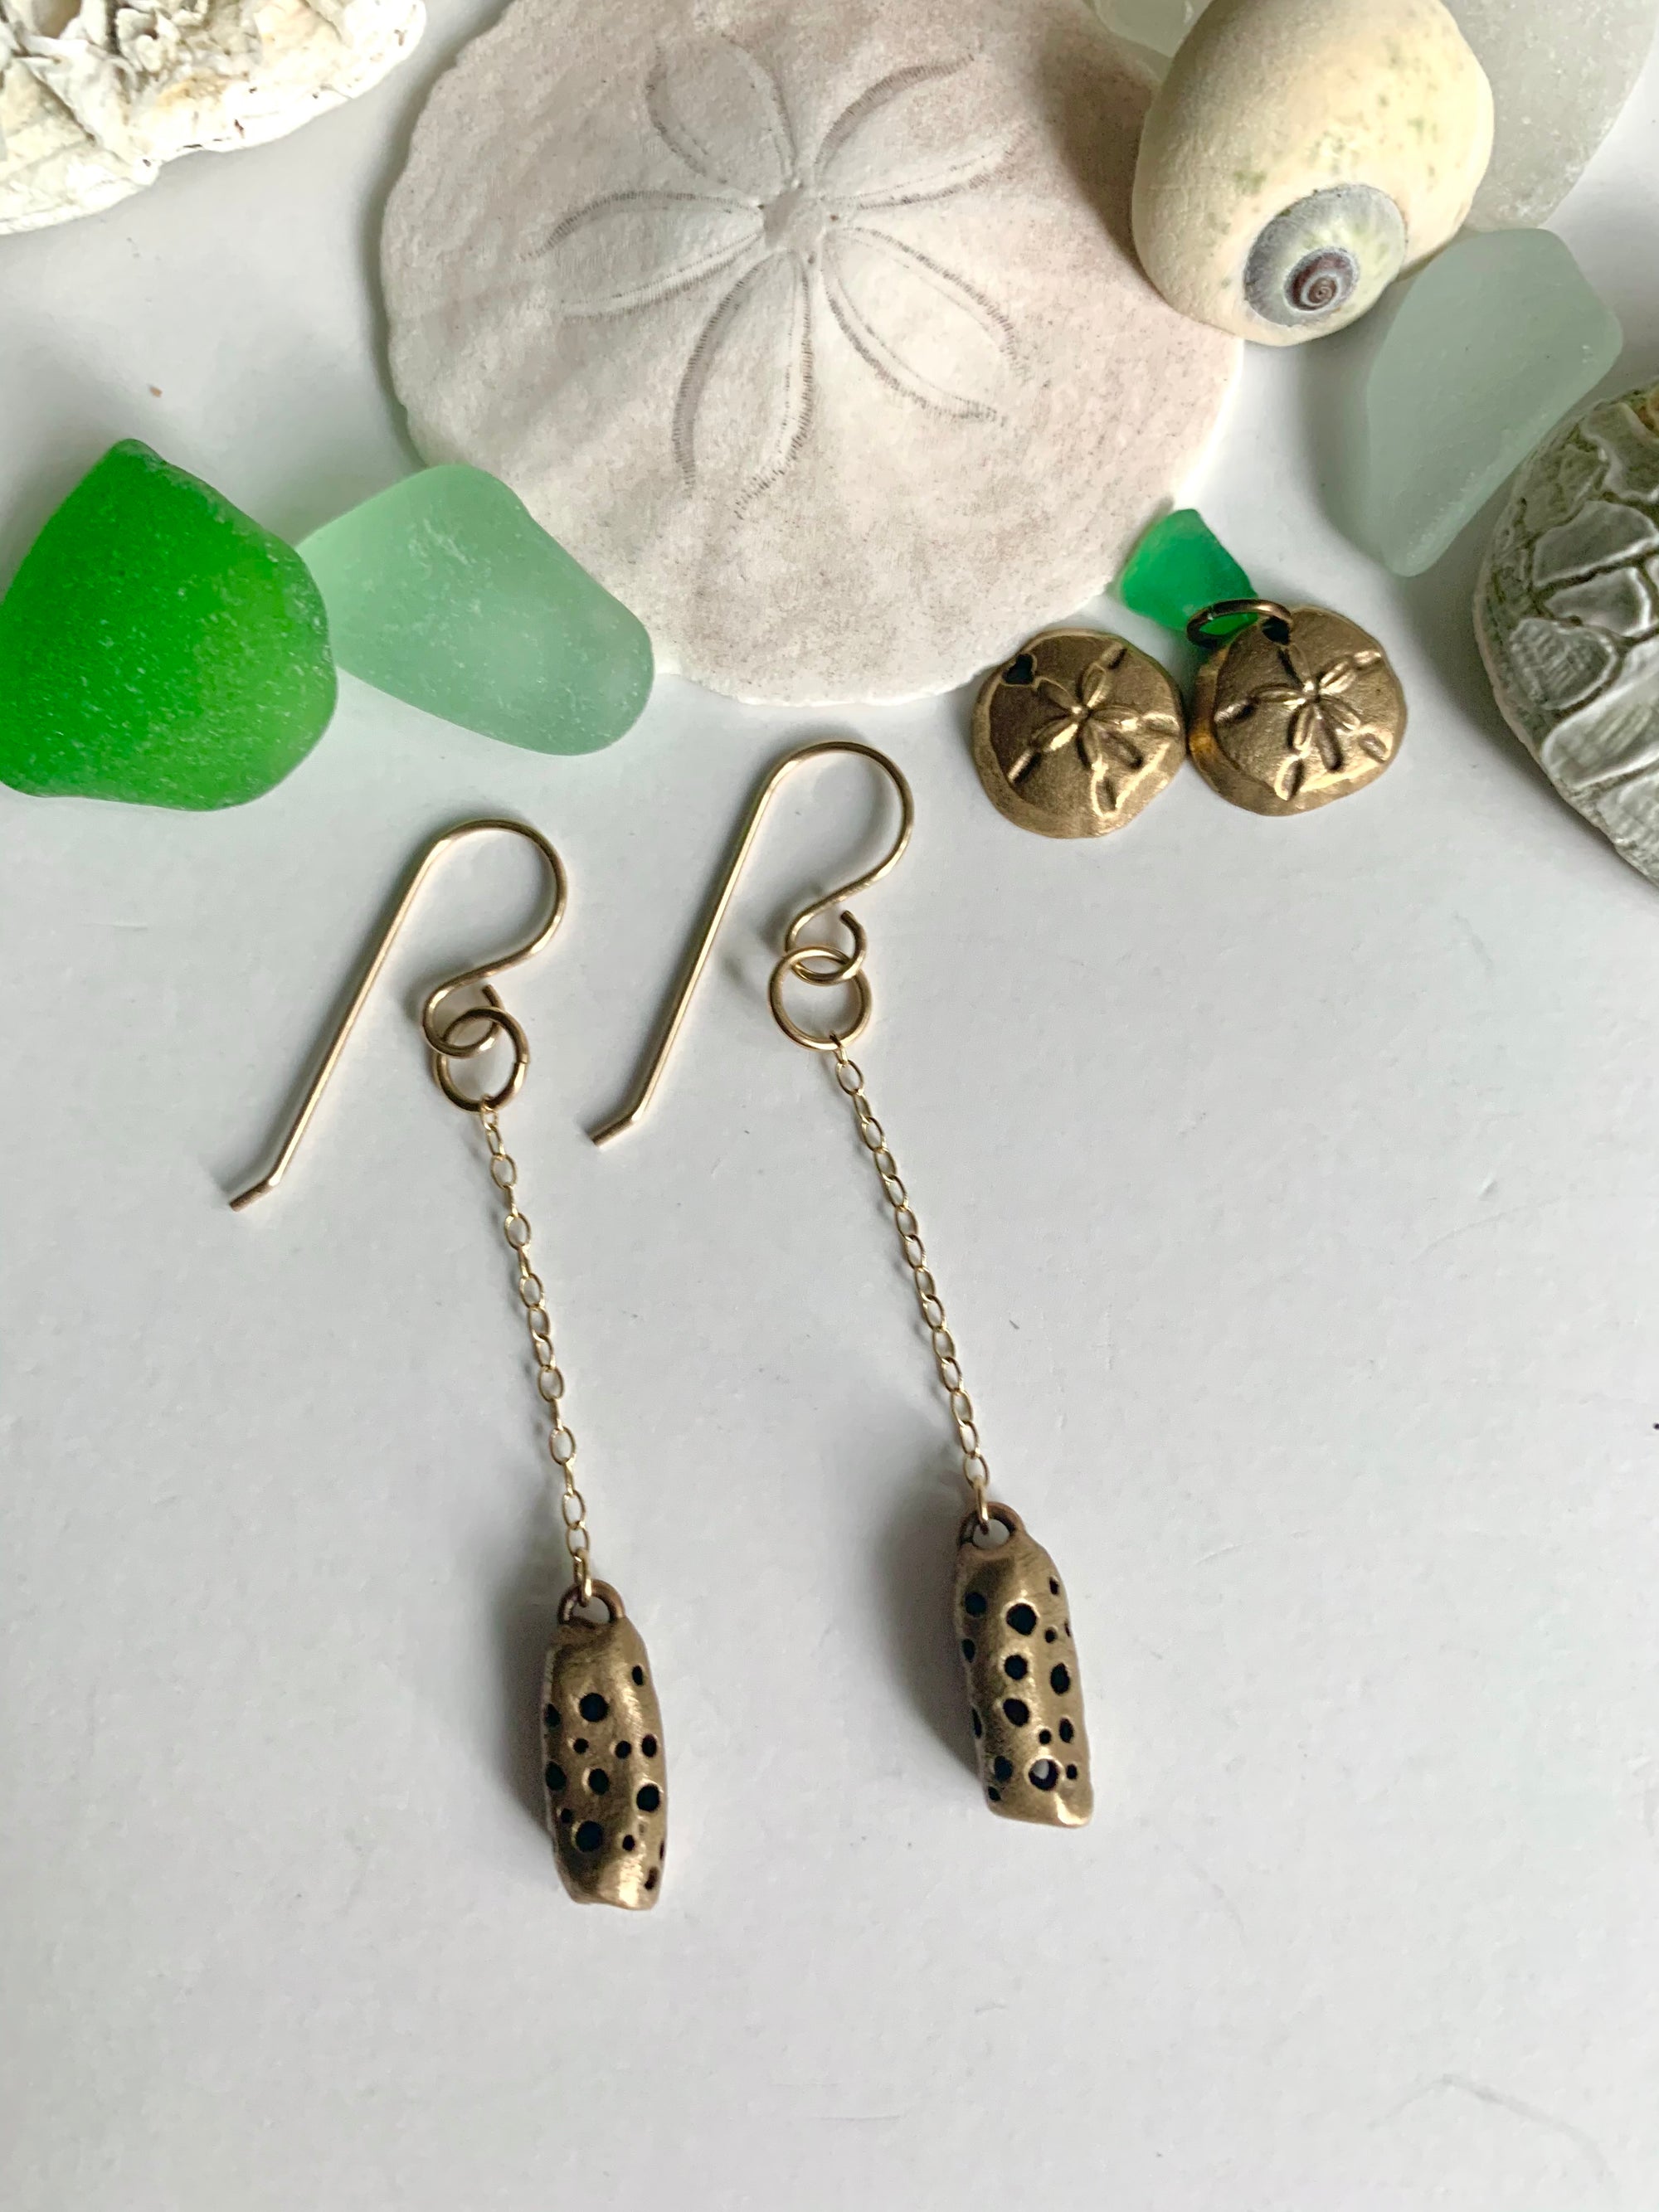 Bronze handmade earrings with seashells and sea glass